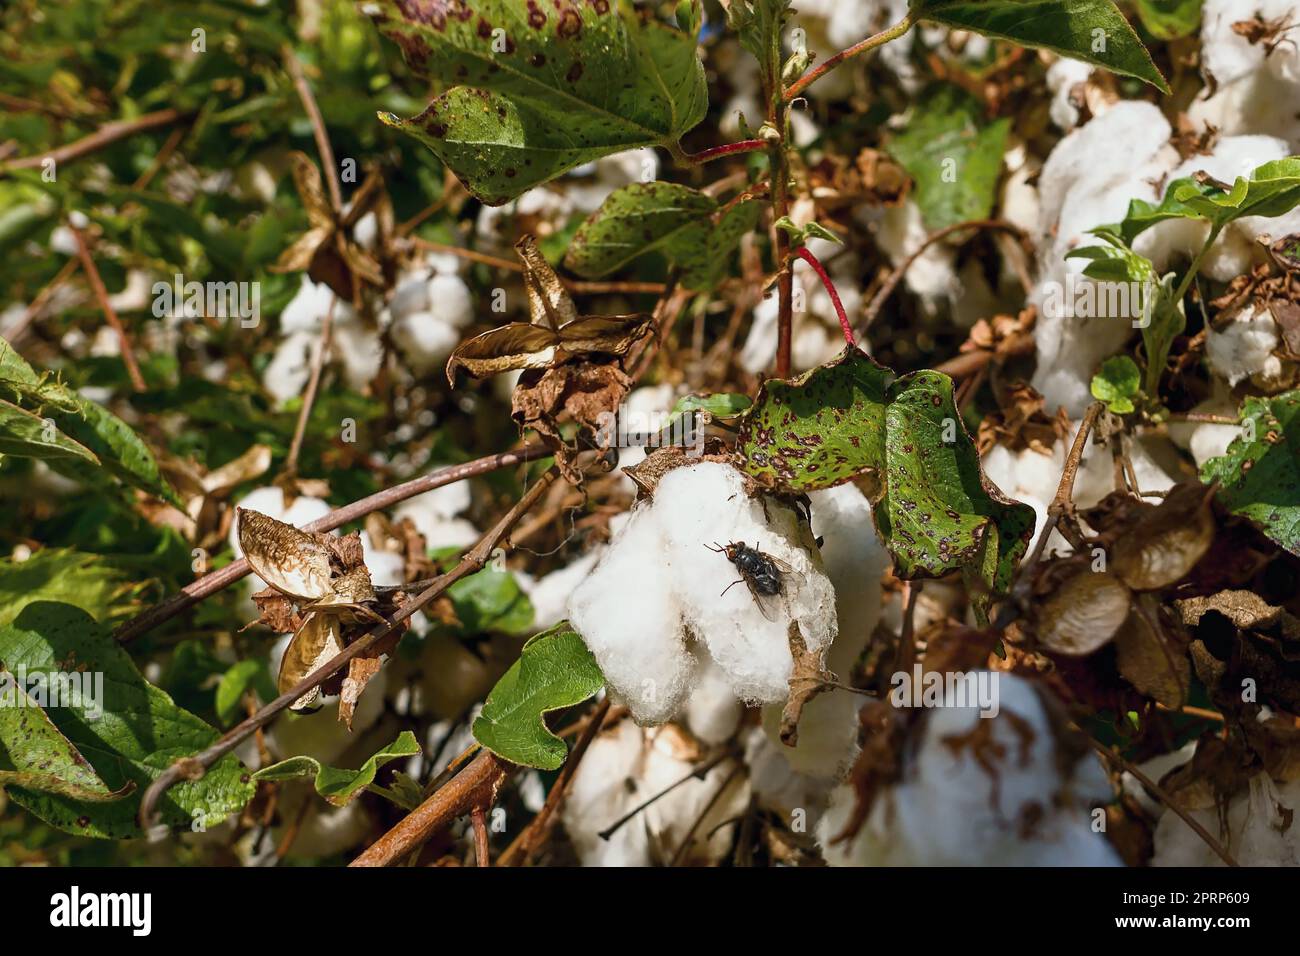 Cotton plant, Gossypium, Malvaceae family Stock Photo